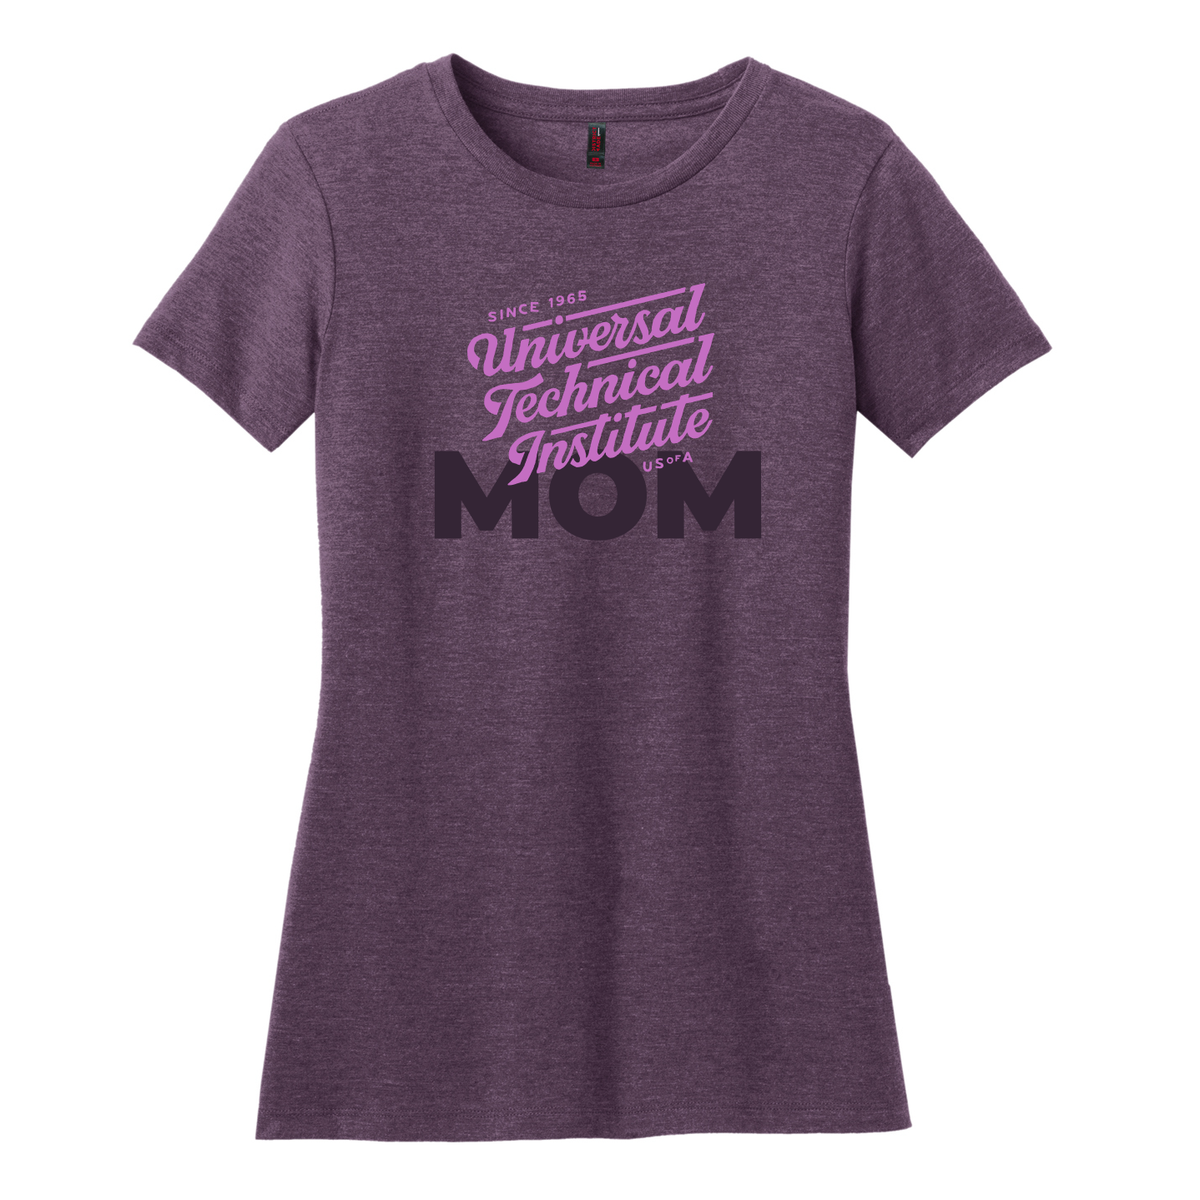 Universal Technical Institute MOM T-Shirt